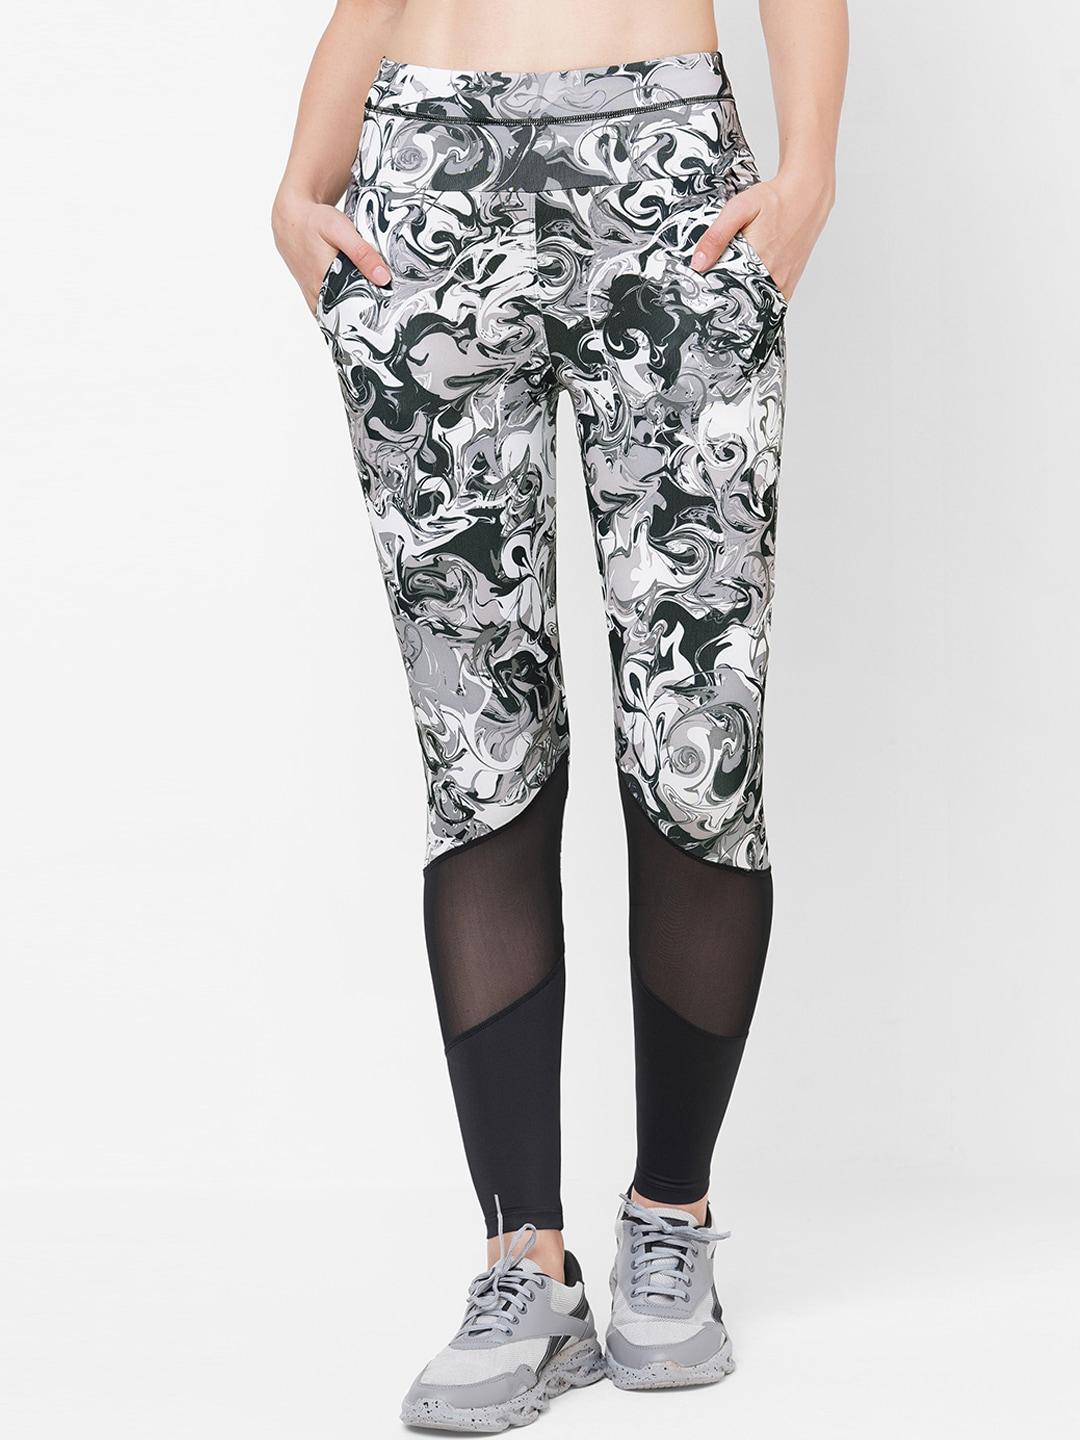 laasa-sports-women-dry-fit-printed-sports-tights